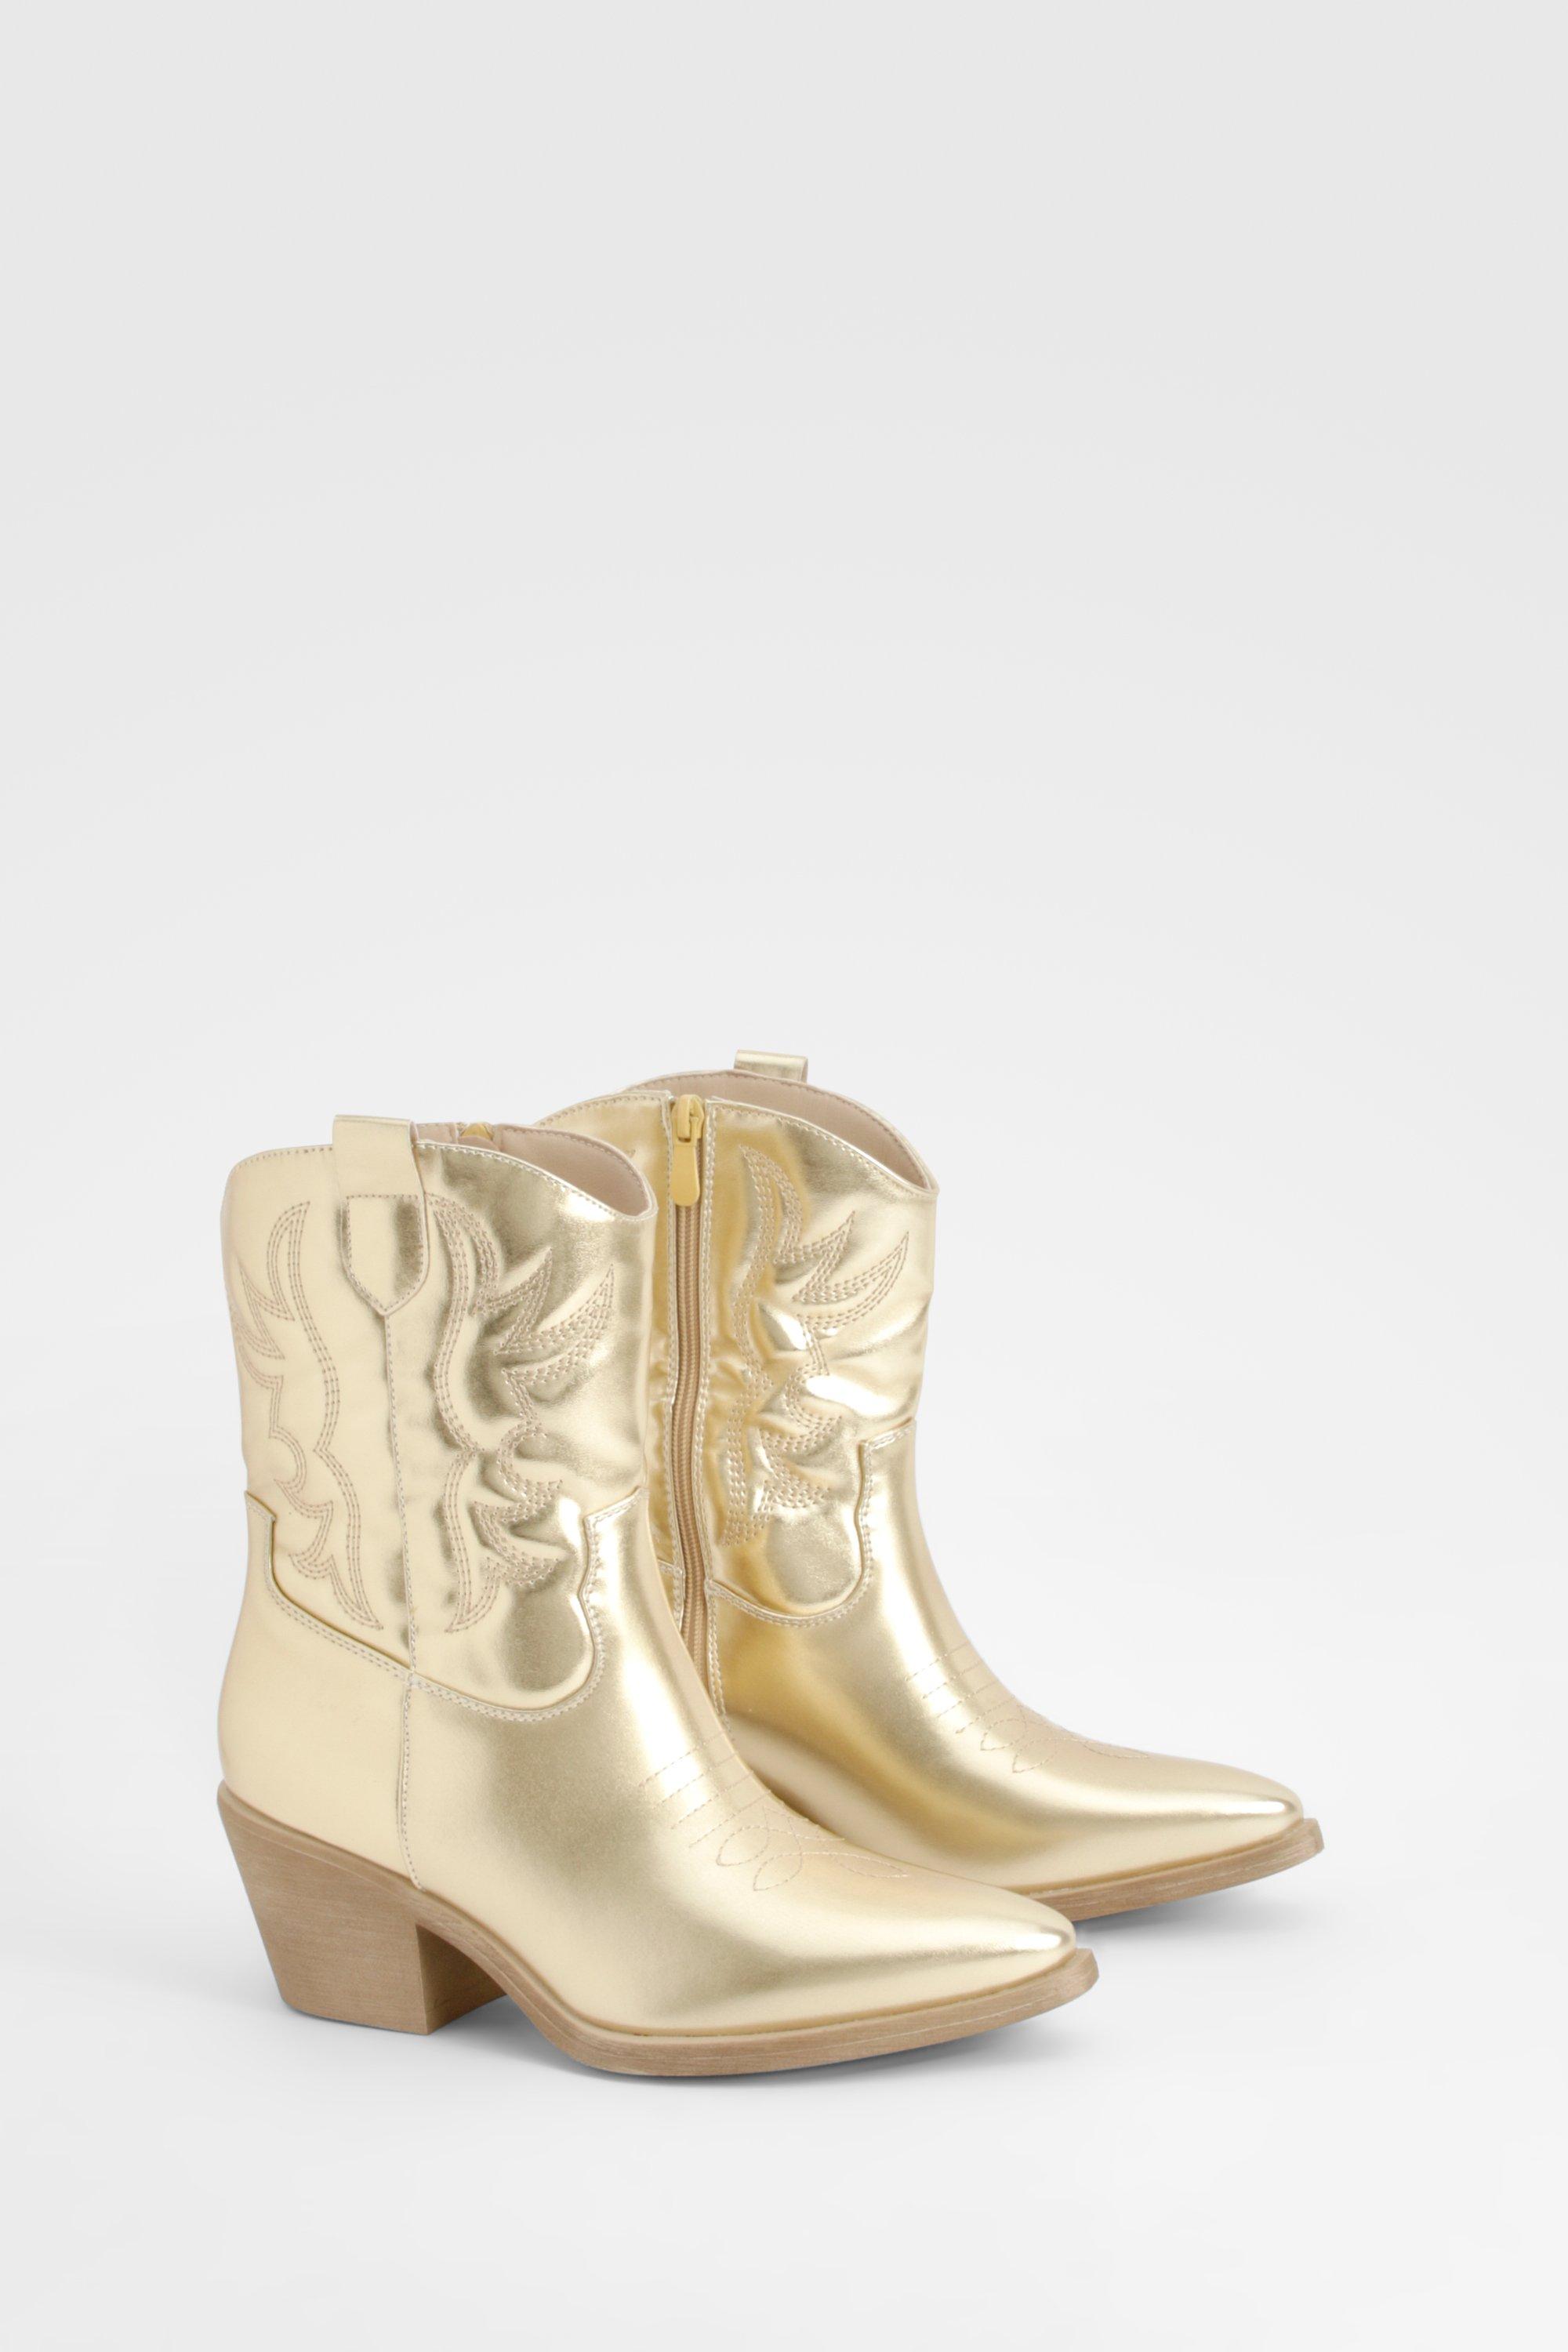 Boohoo Metallic Ankle High Western Cowboy Boots, Gold